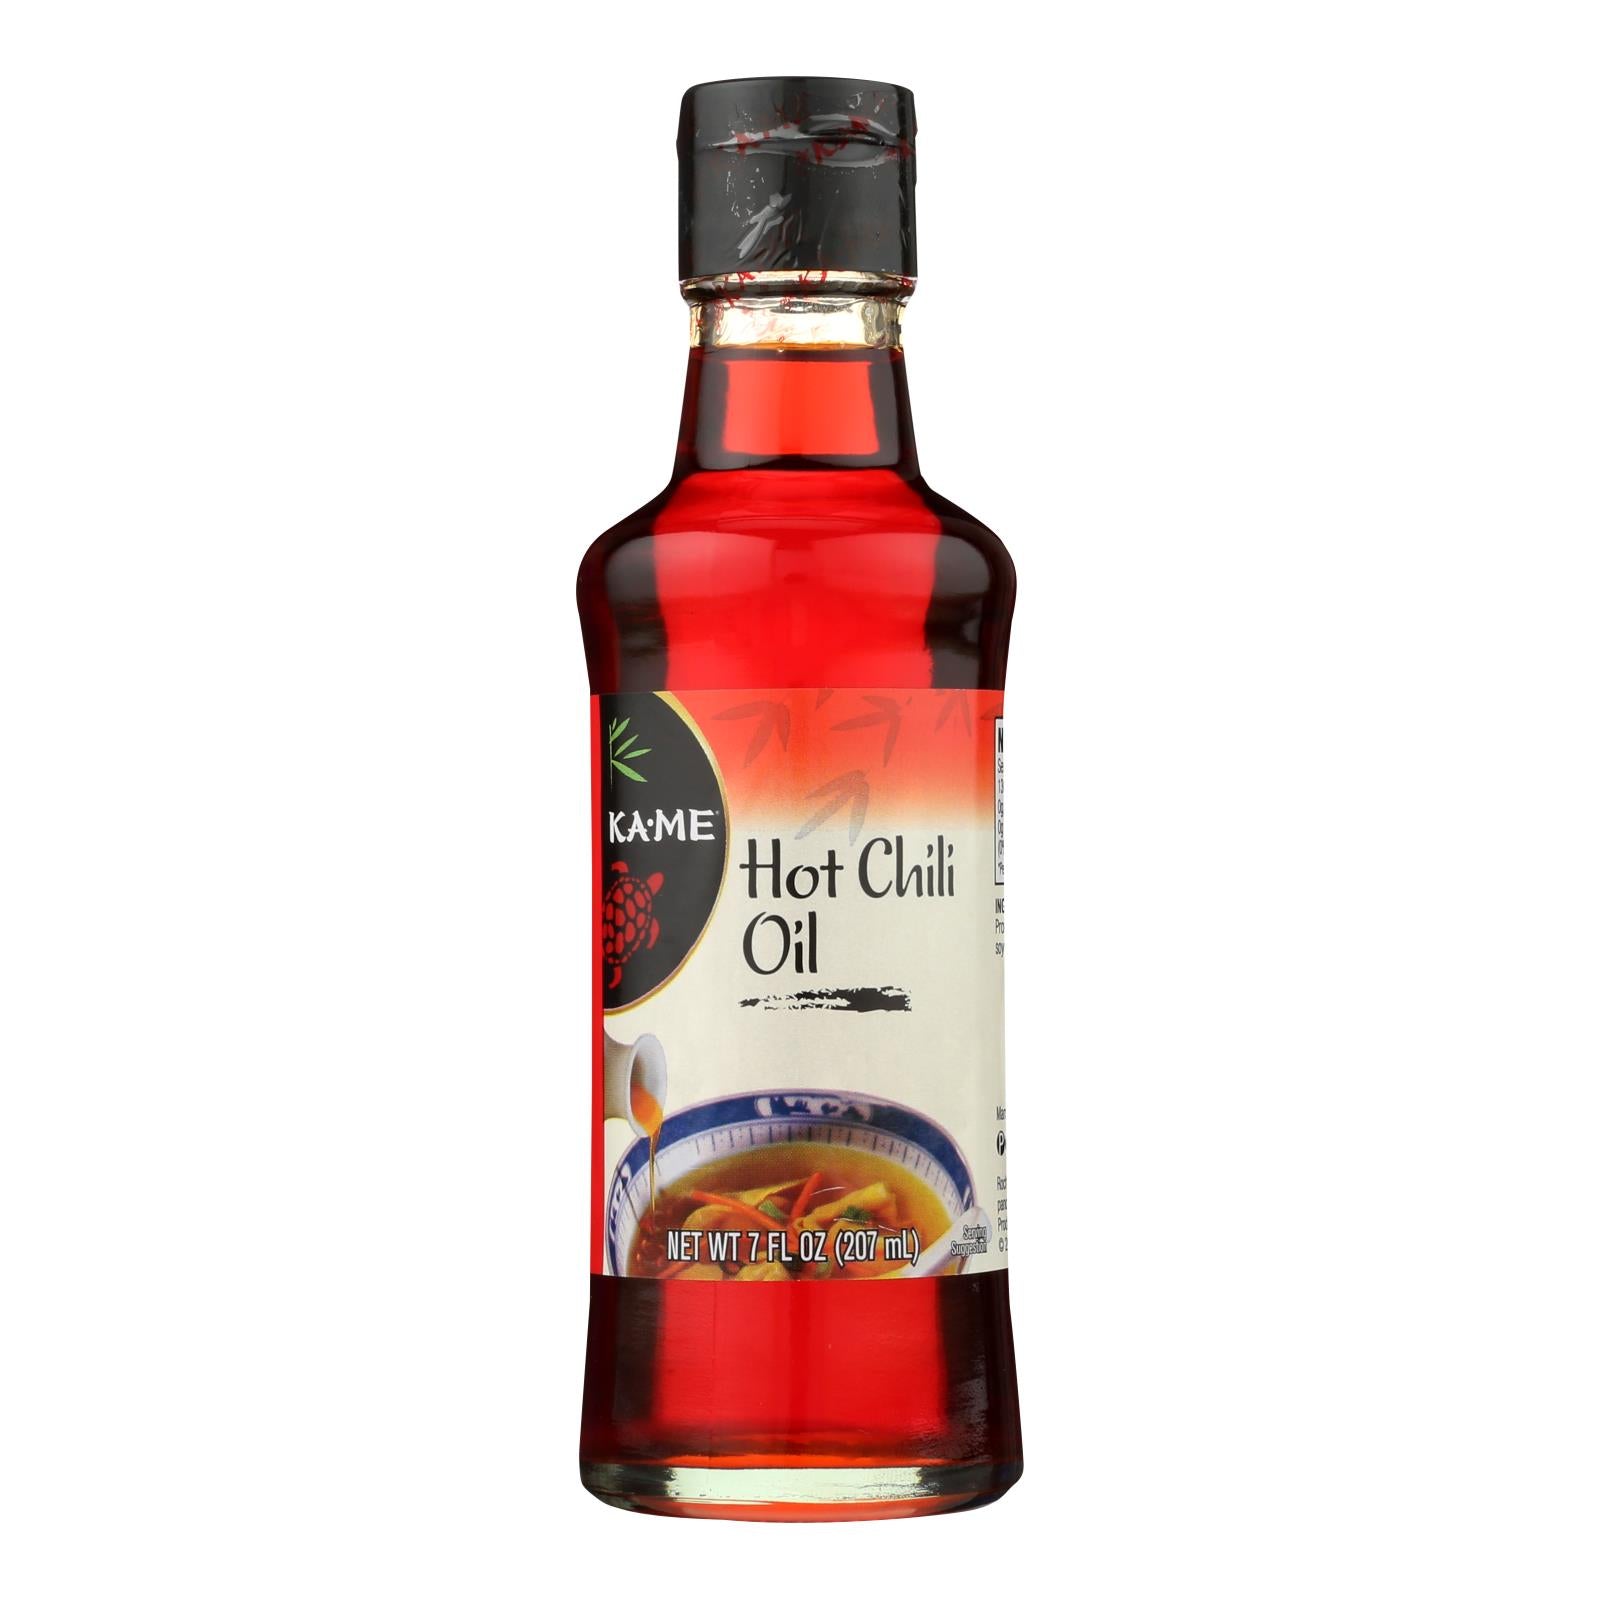 Ka'me Oil - Hot Chili - Case Of 6 - 7 Oz.